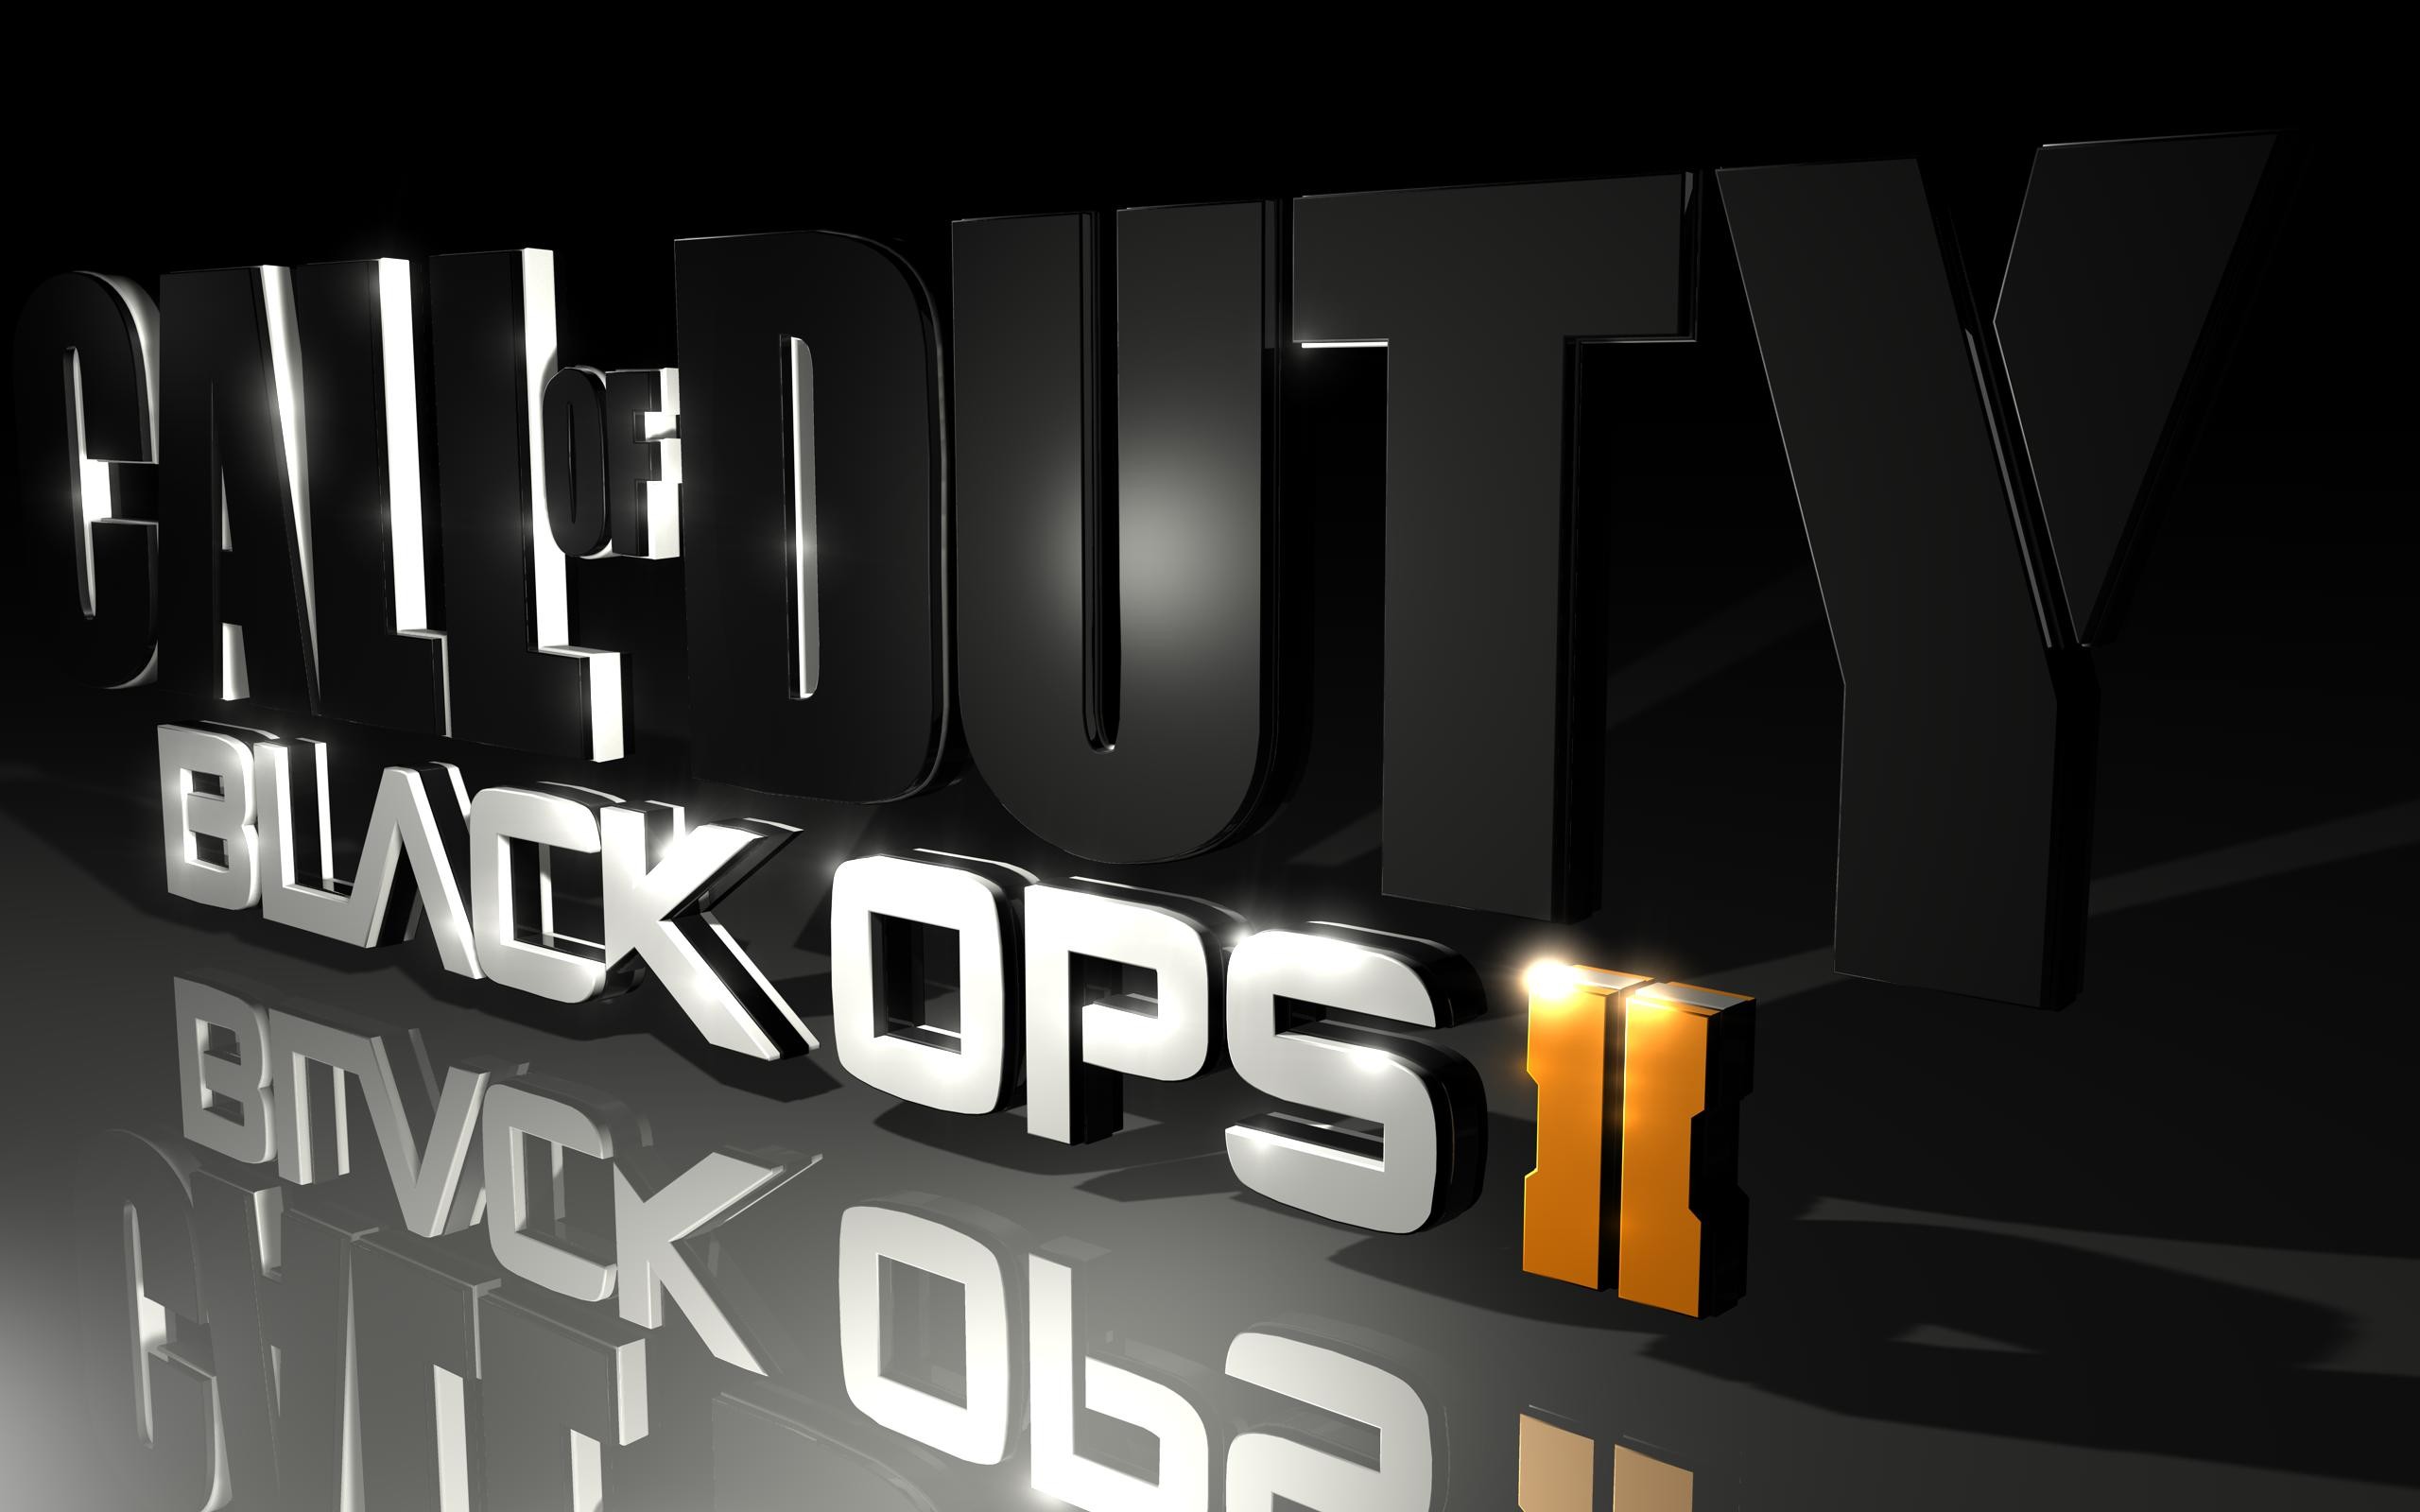 call of duty black ops 3 logo